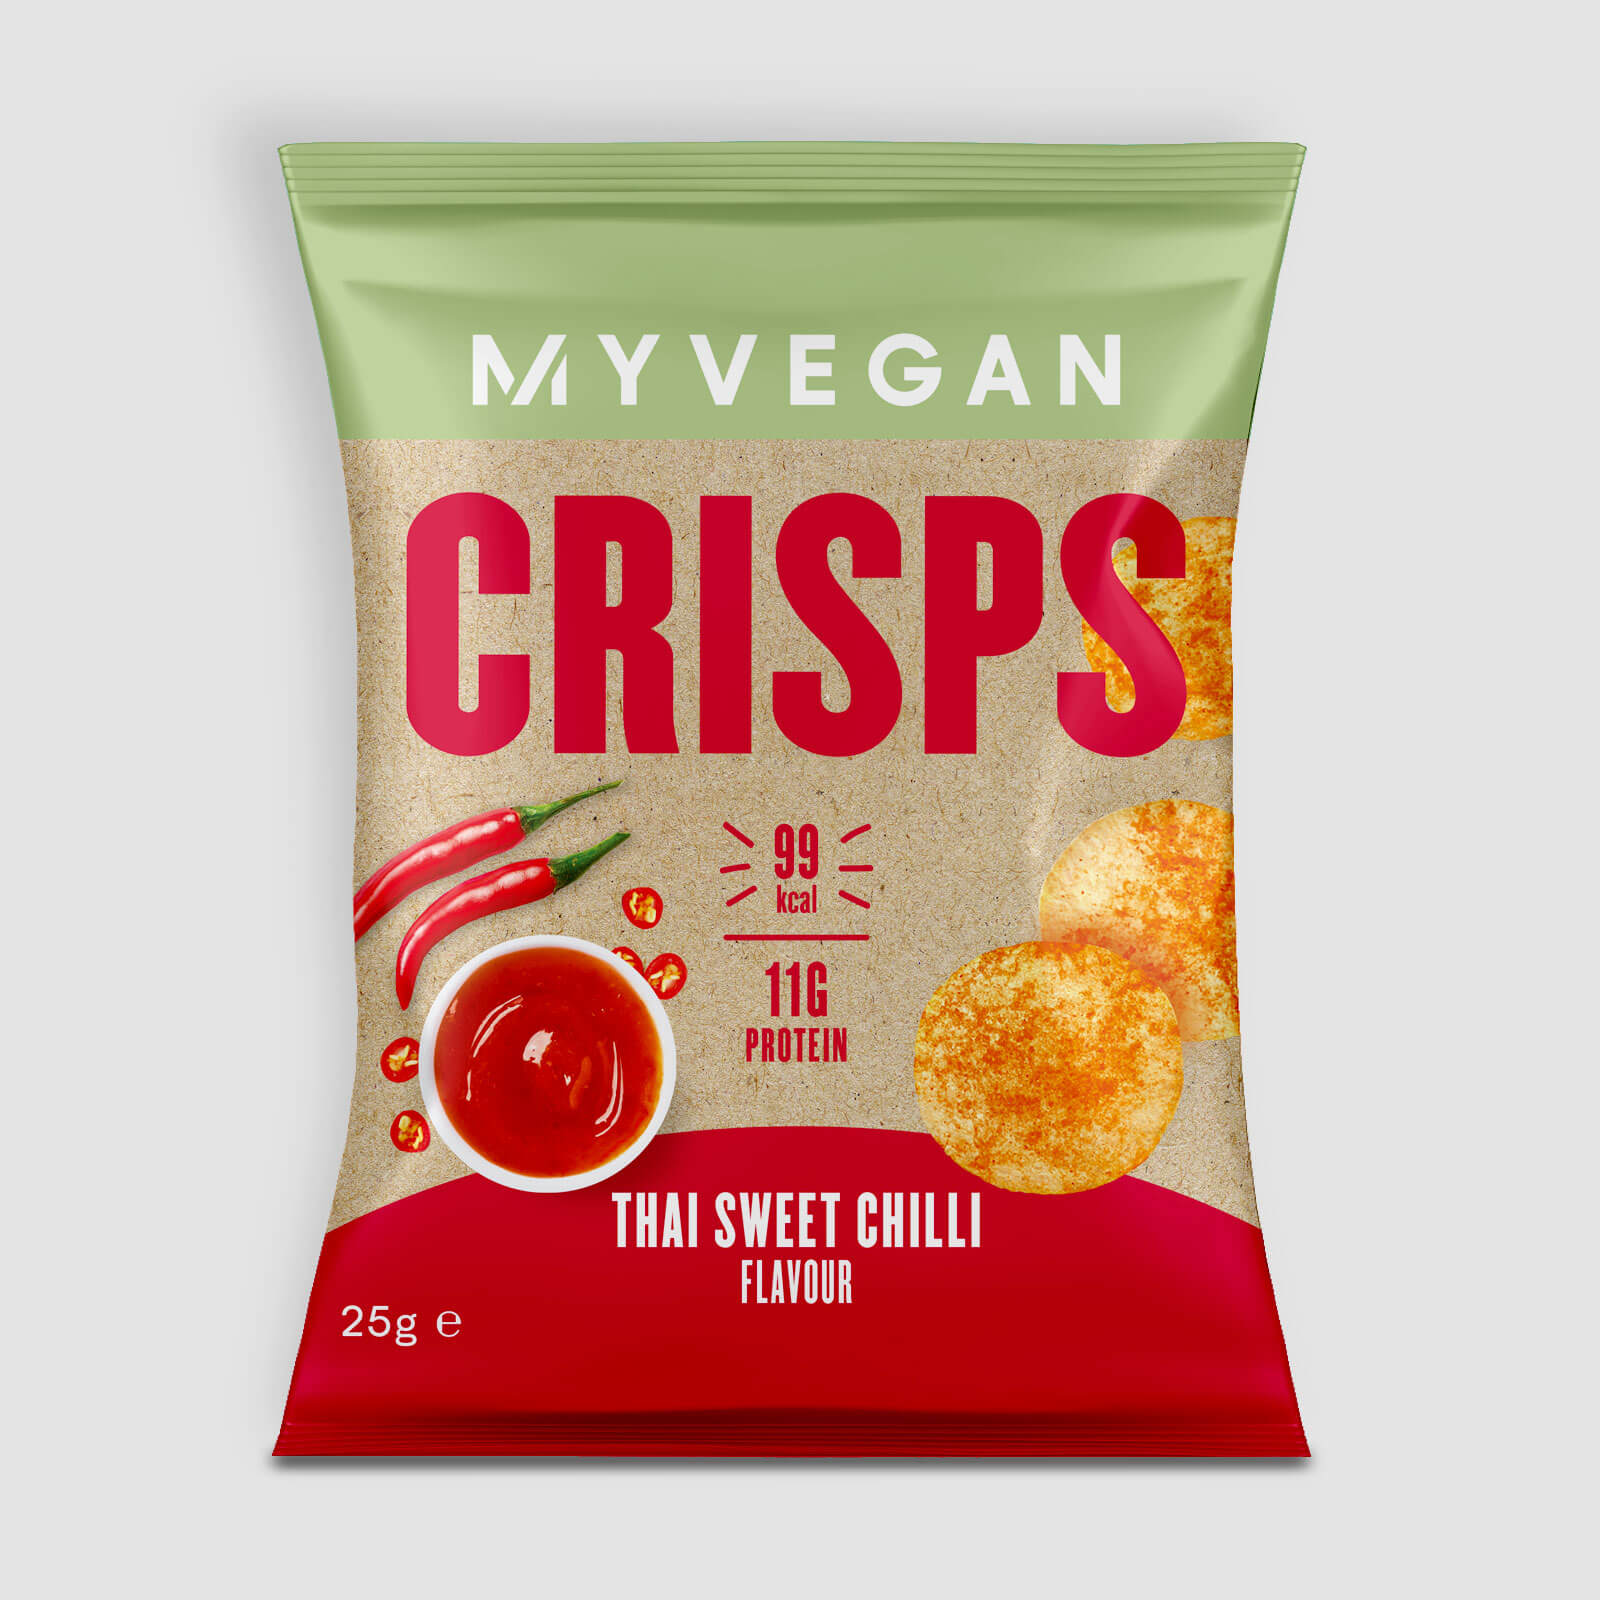 Myvegan Protein Crisps (Sample) - 25g - Thai Sweet Chilli